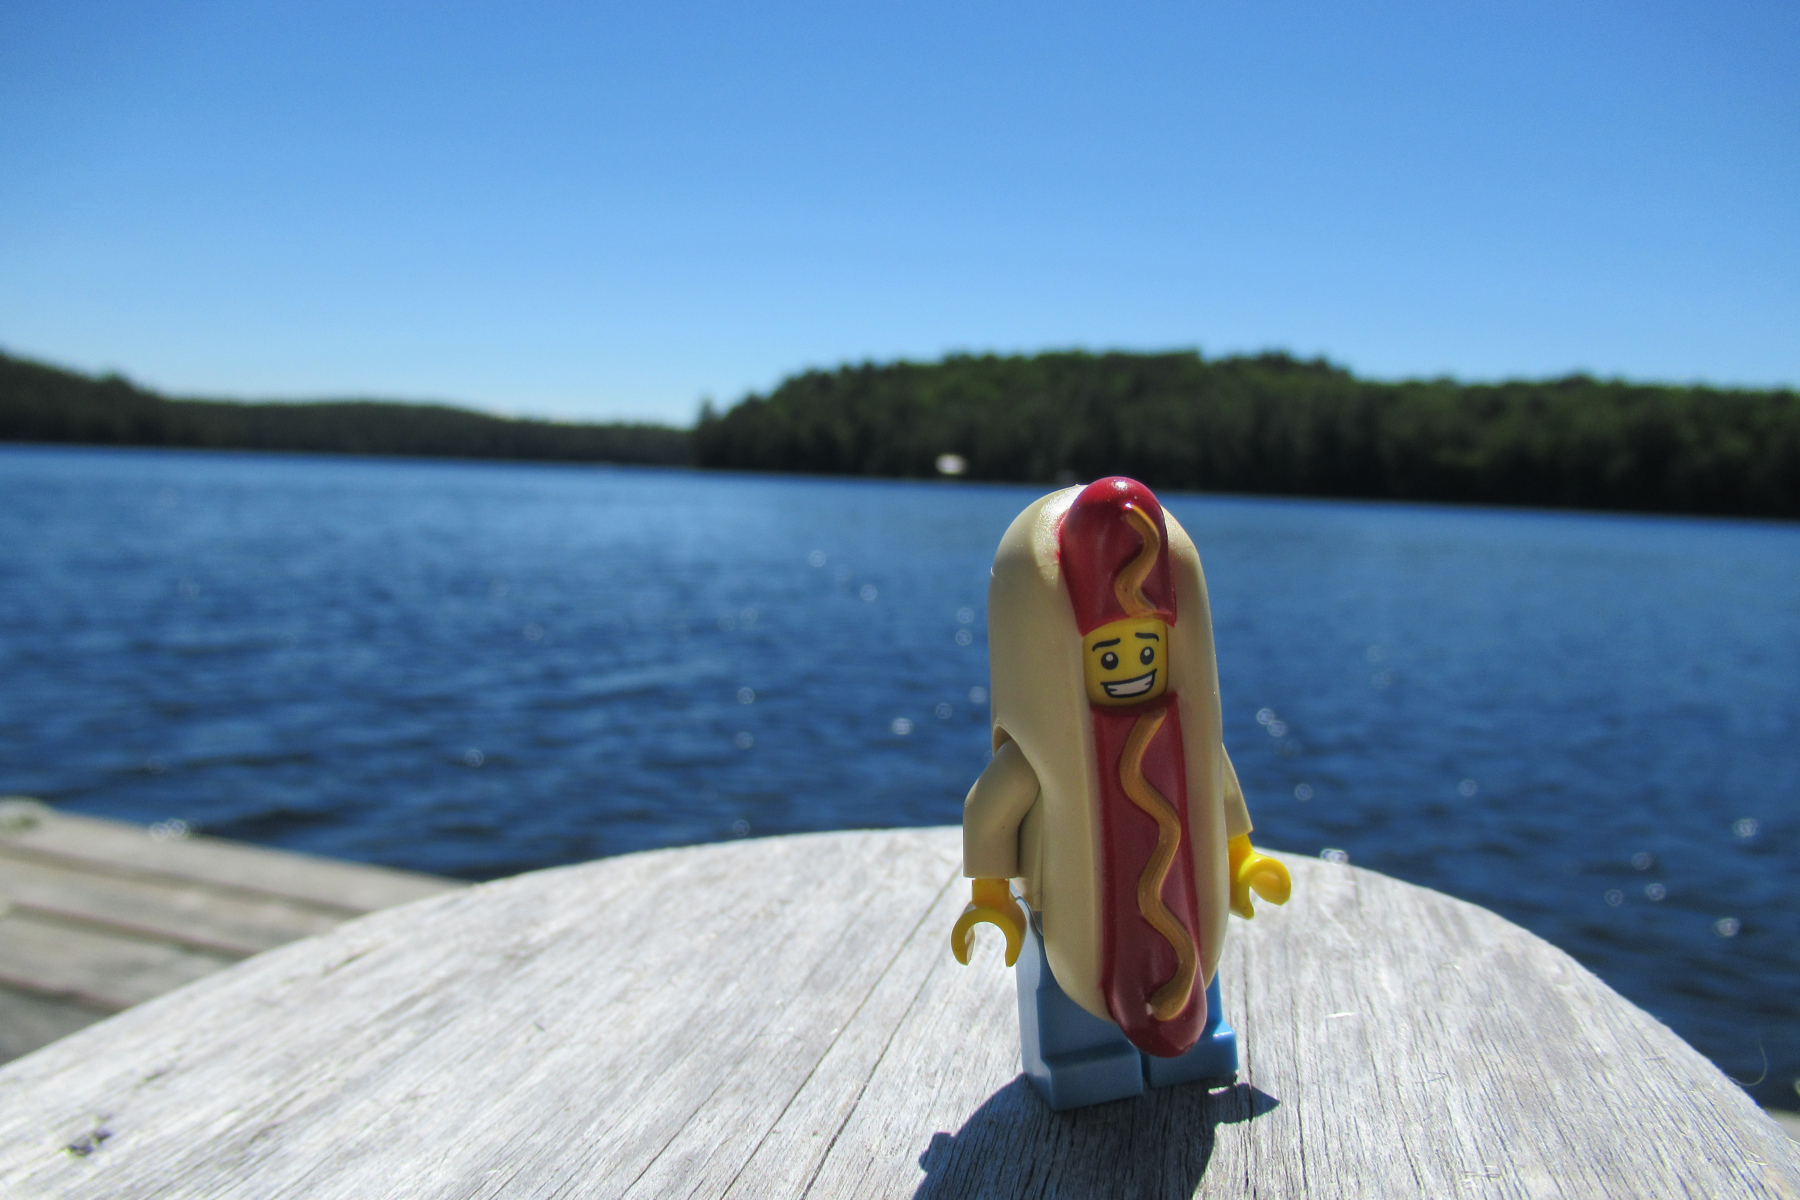 Lego Hot Dog Man checking out  Northern Ontario ,Canada